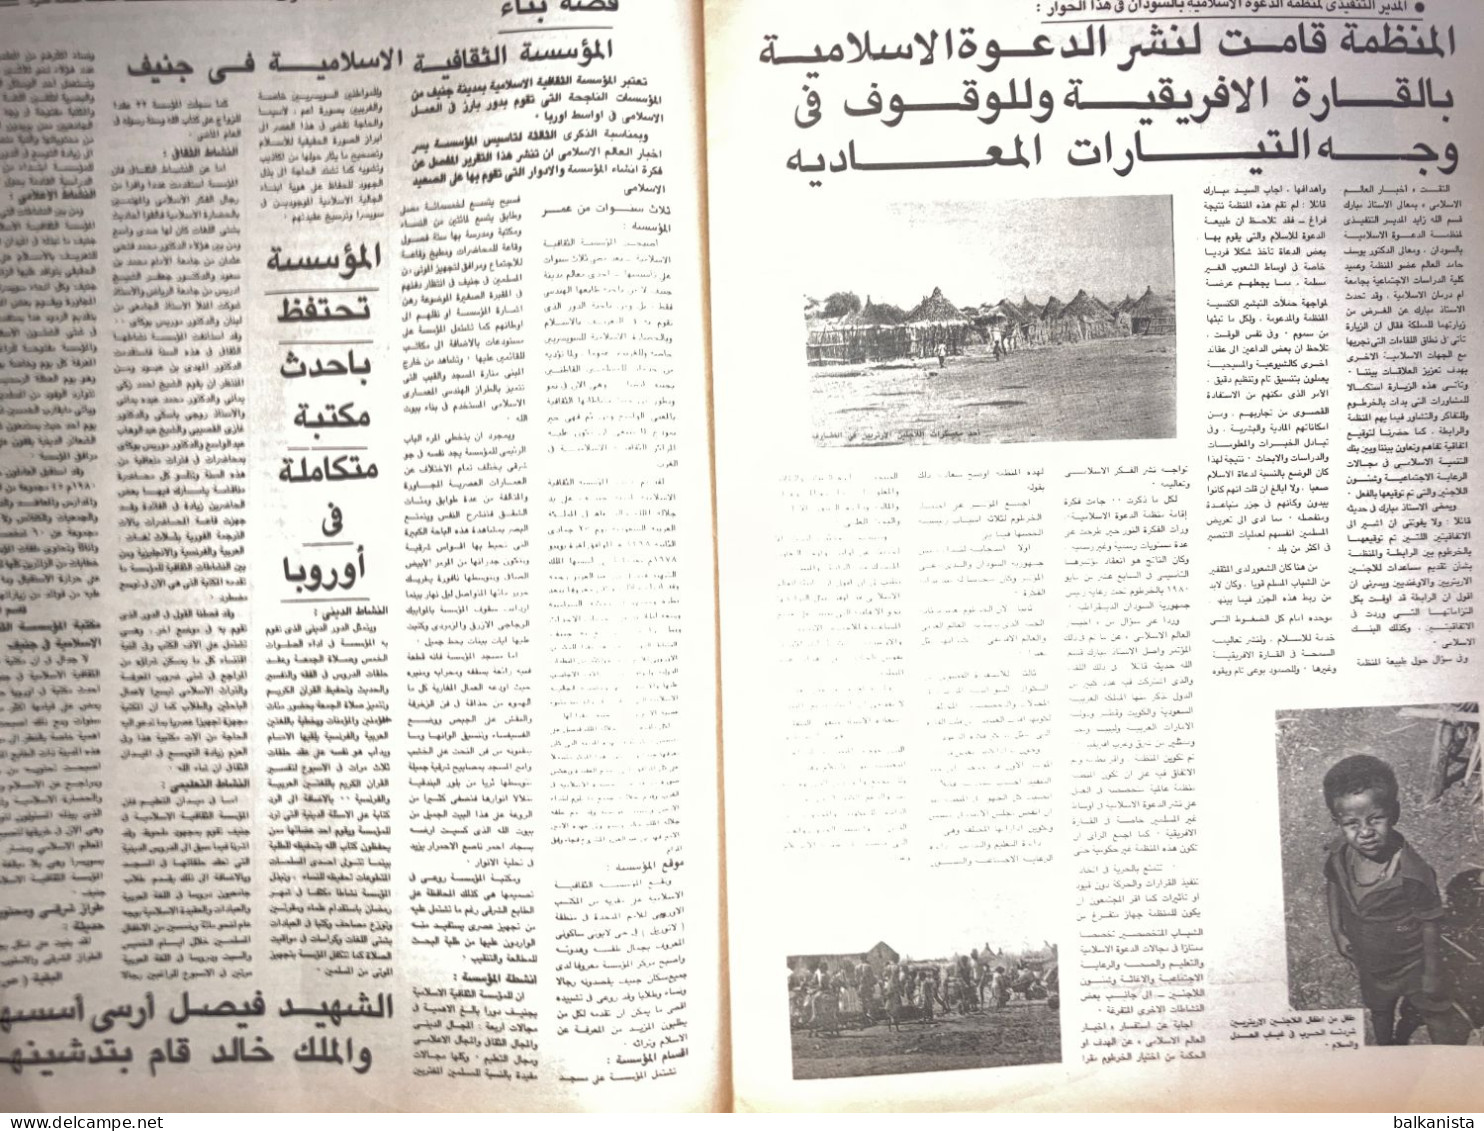 Saudi Arabia Akhbar al-Alam al-Islami Newspaper 1 January 1981